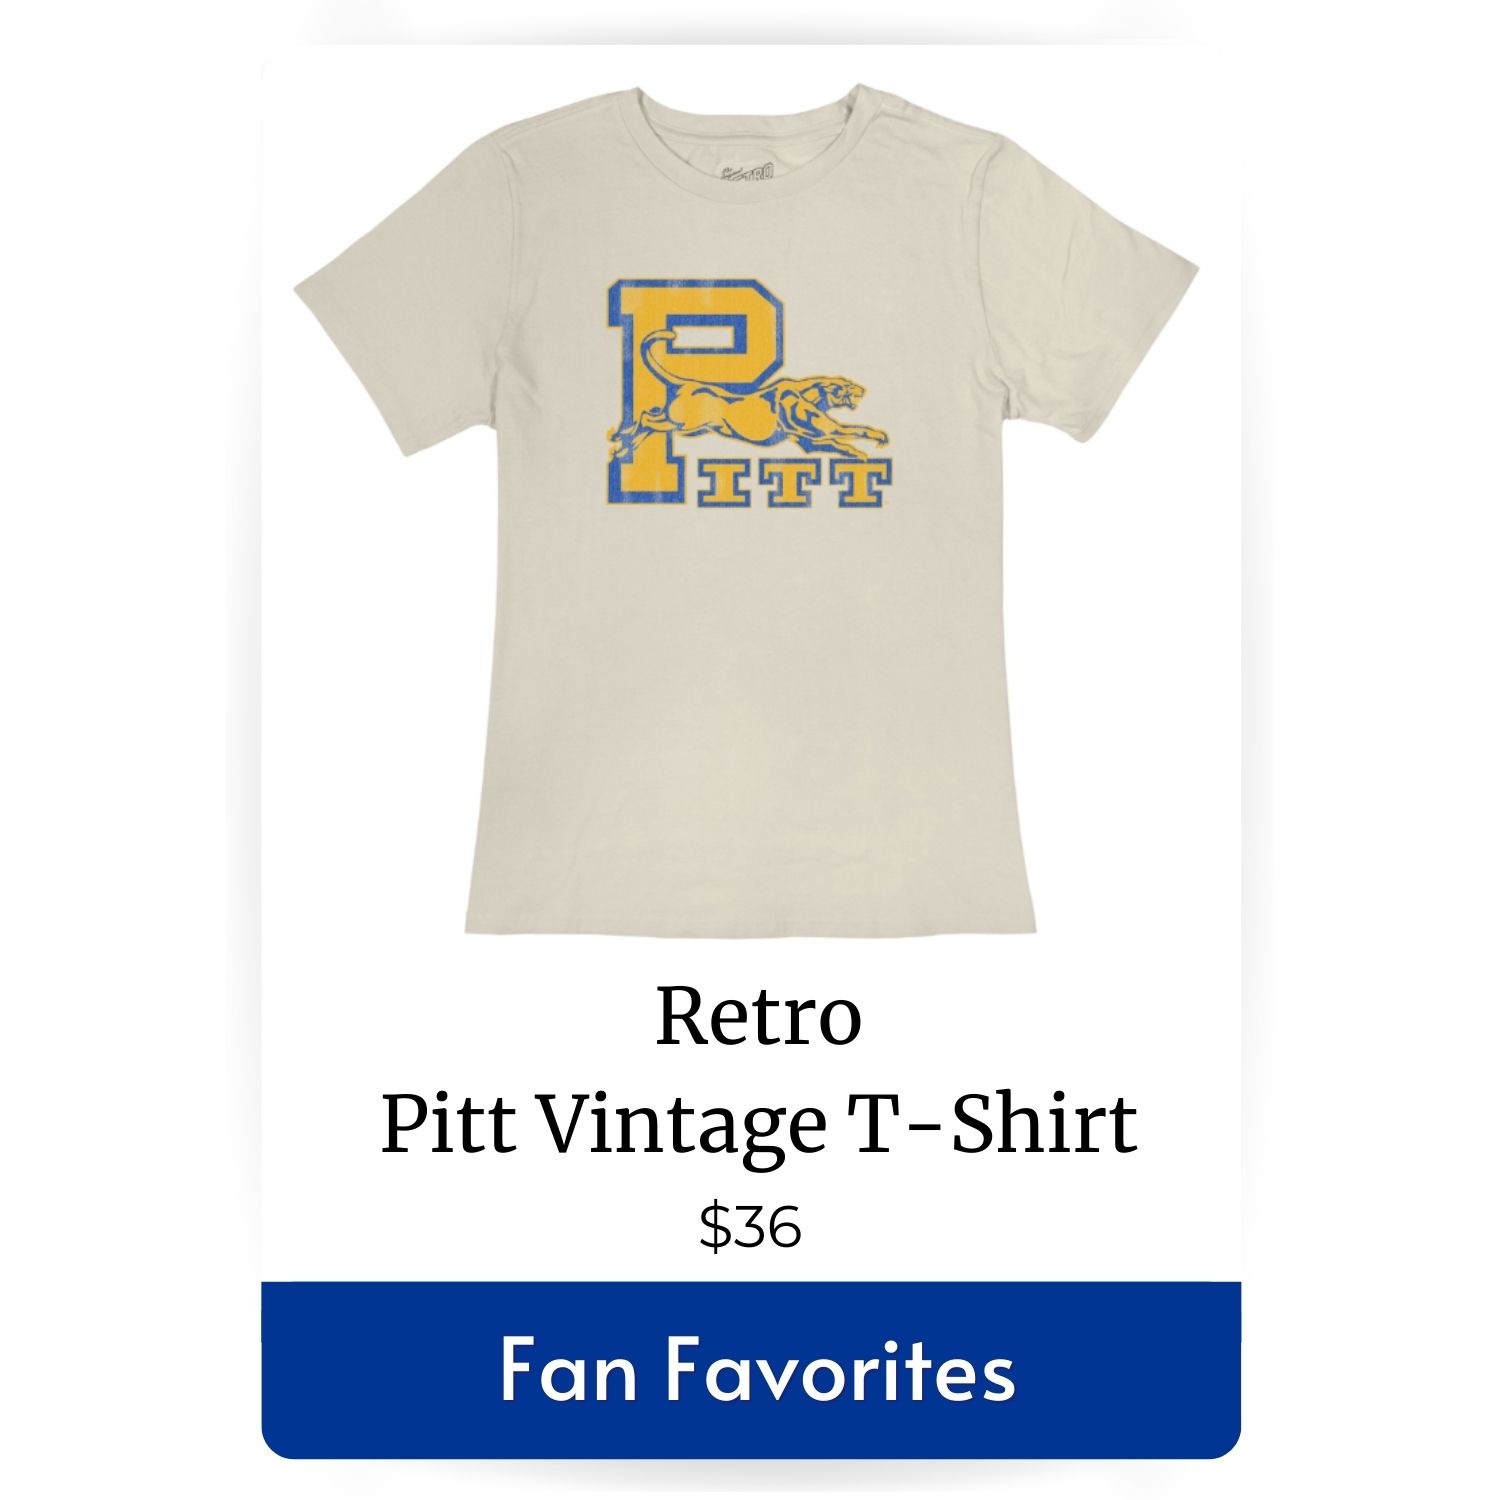 featured product fan favorite Retro Pitt Vintage T-Shirt 36 dollars